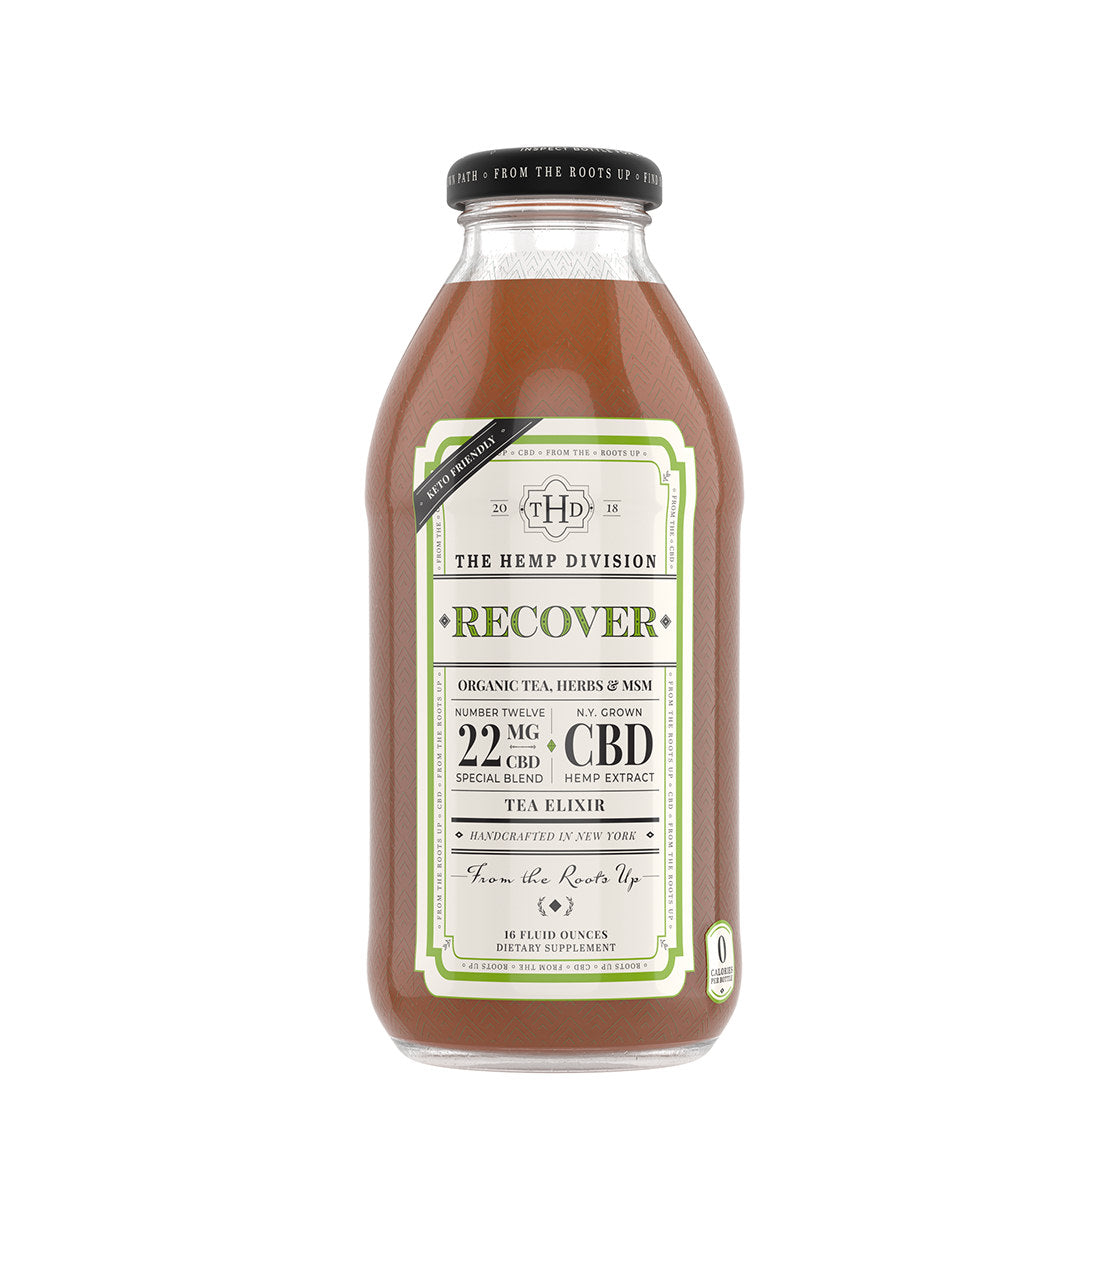 Recover - Organic Tea, Herbs & MSM - 22 MG CBD - 16 oz. Bottle Case of 12 Bottles - Harney & Sons Fine Teas